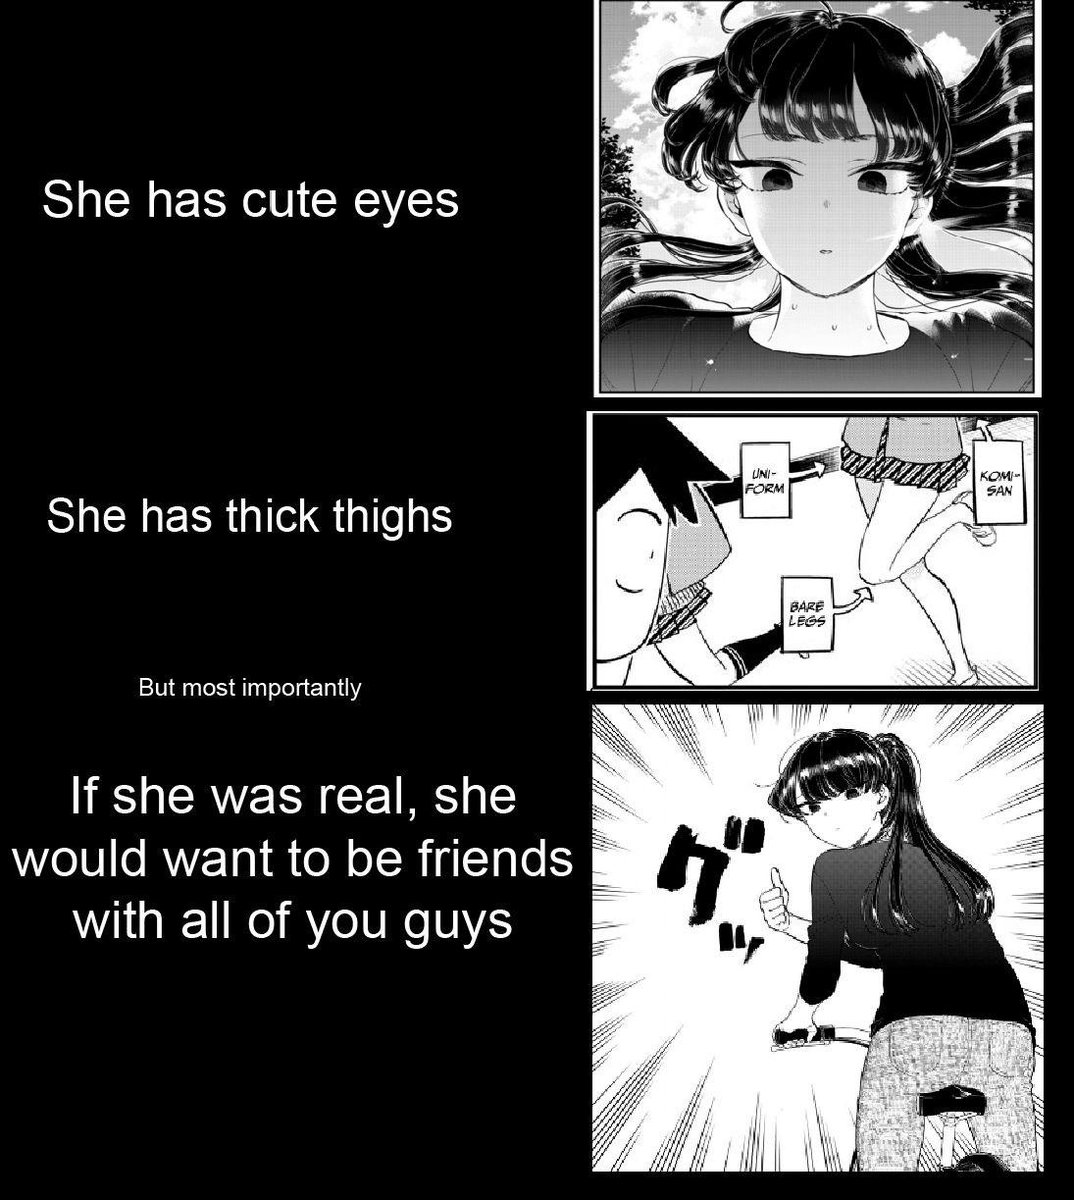 r/animemes on X: Ohayo Gozaimasu~ #Animemes #memes #anime https